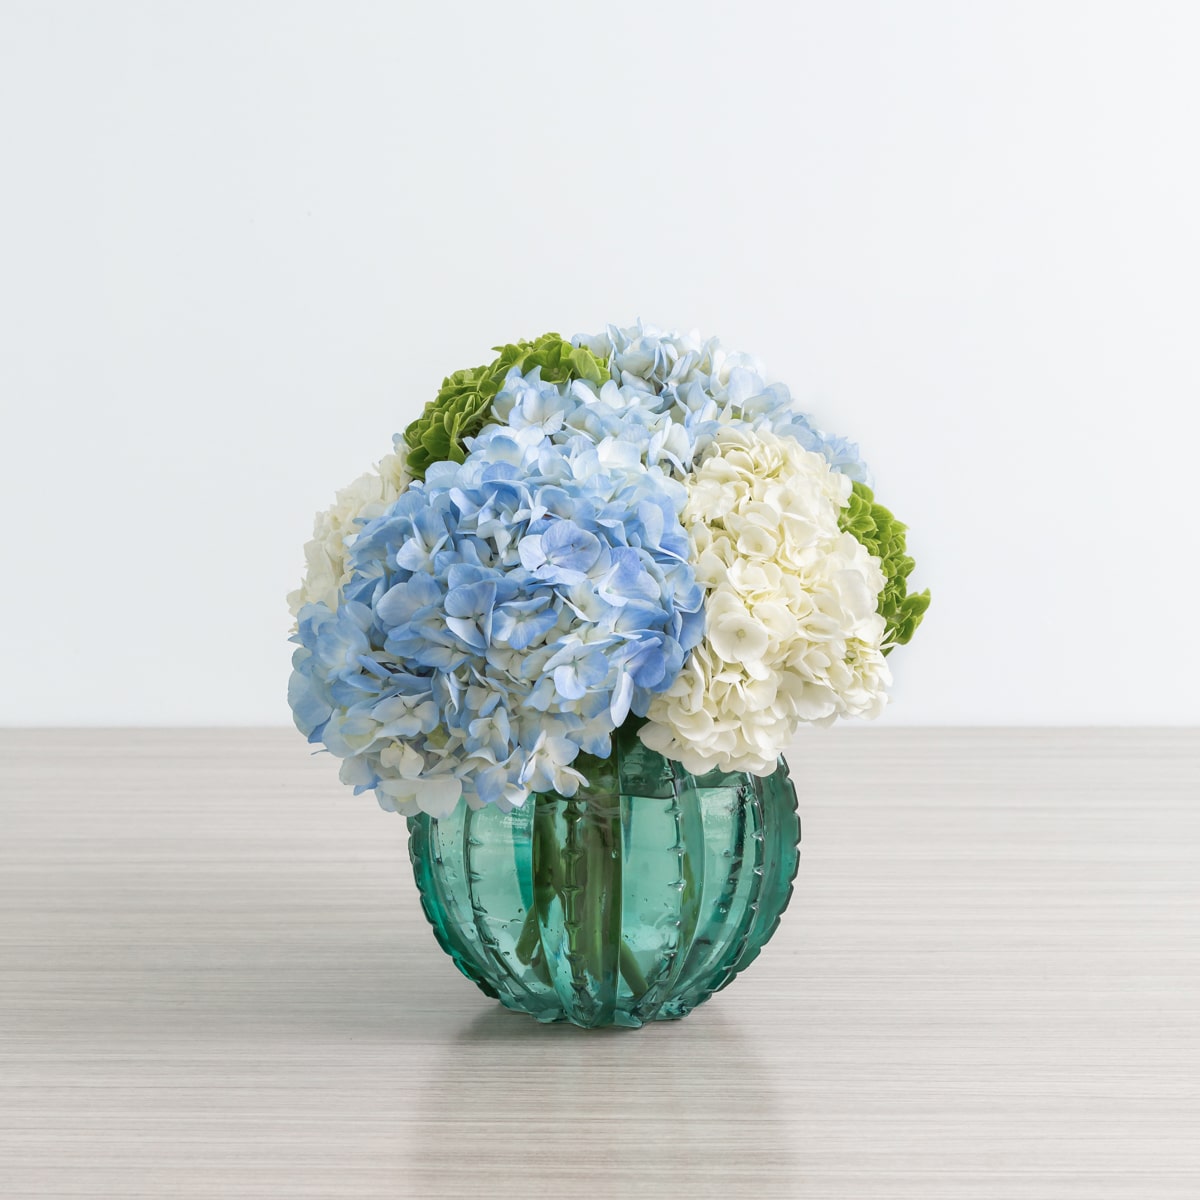 Peridot vase arrangement with assorted hydrangeas from Le Bouquet St.Laurent